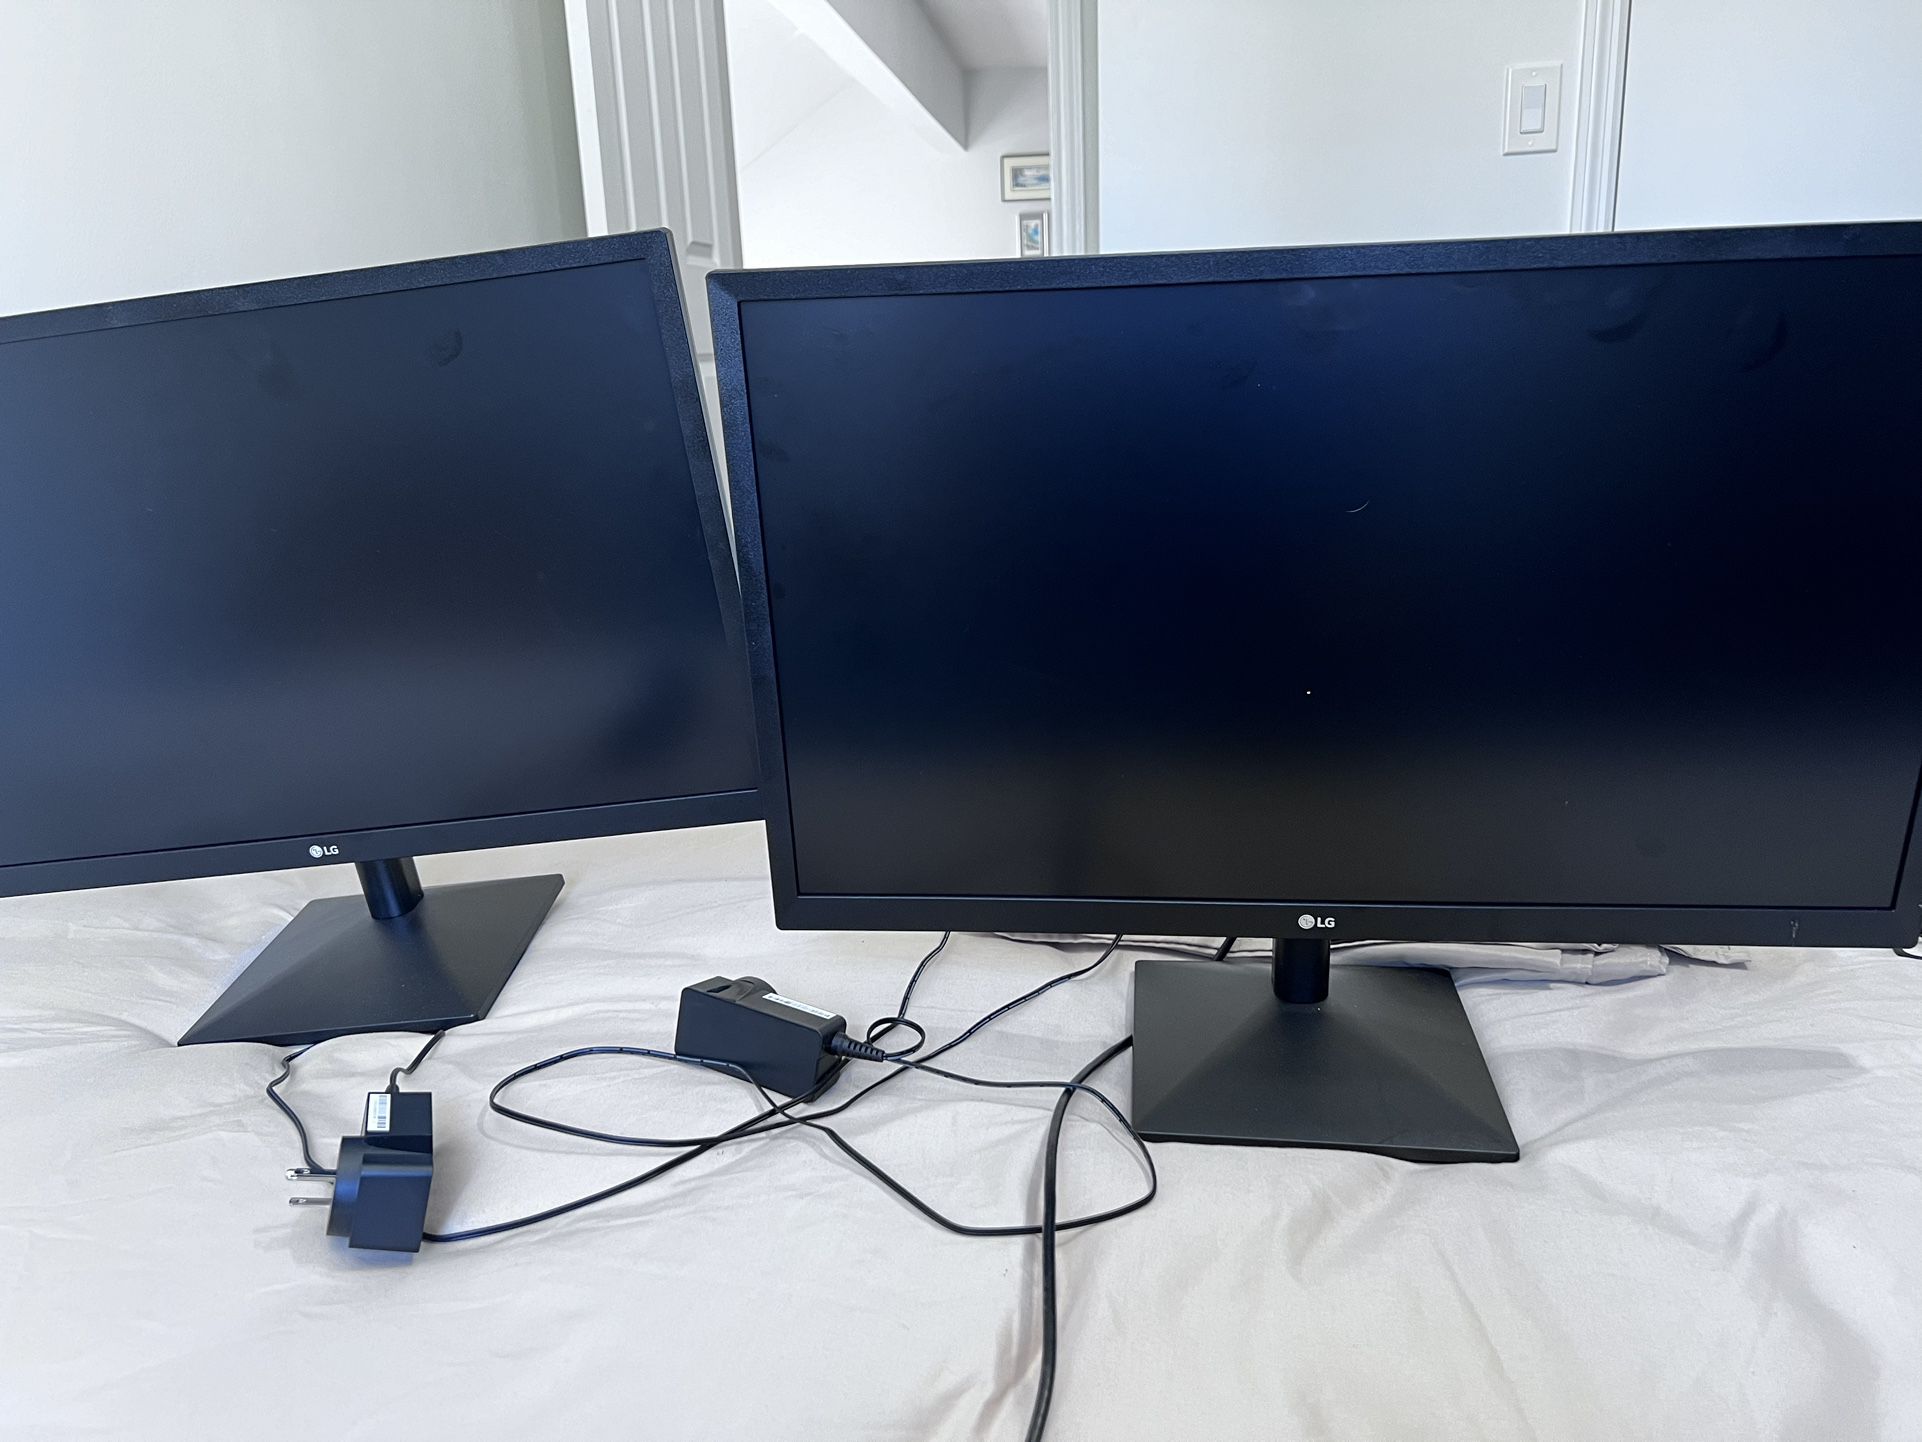 Dual LG 17” Monitors 